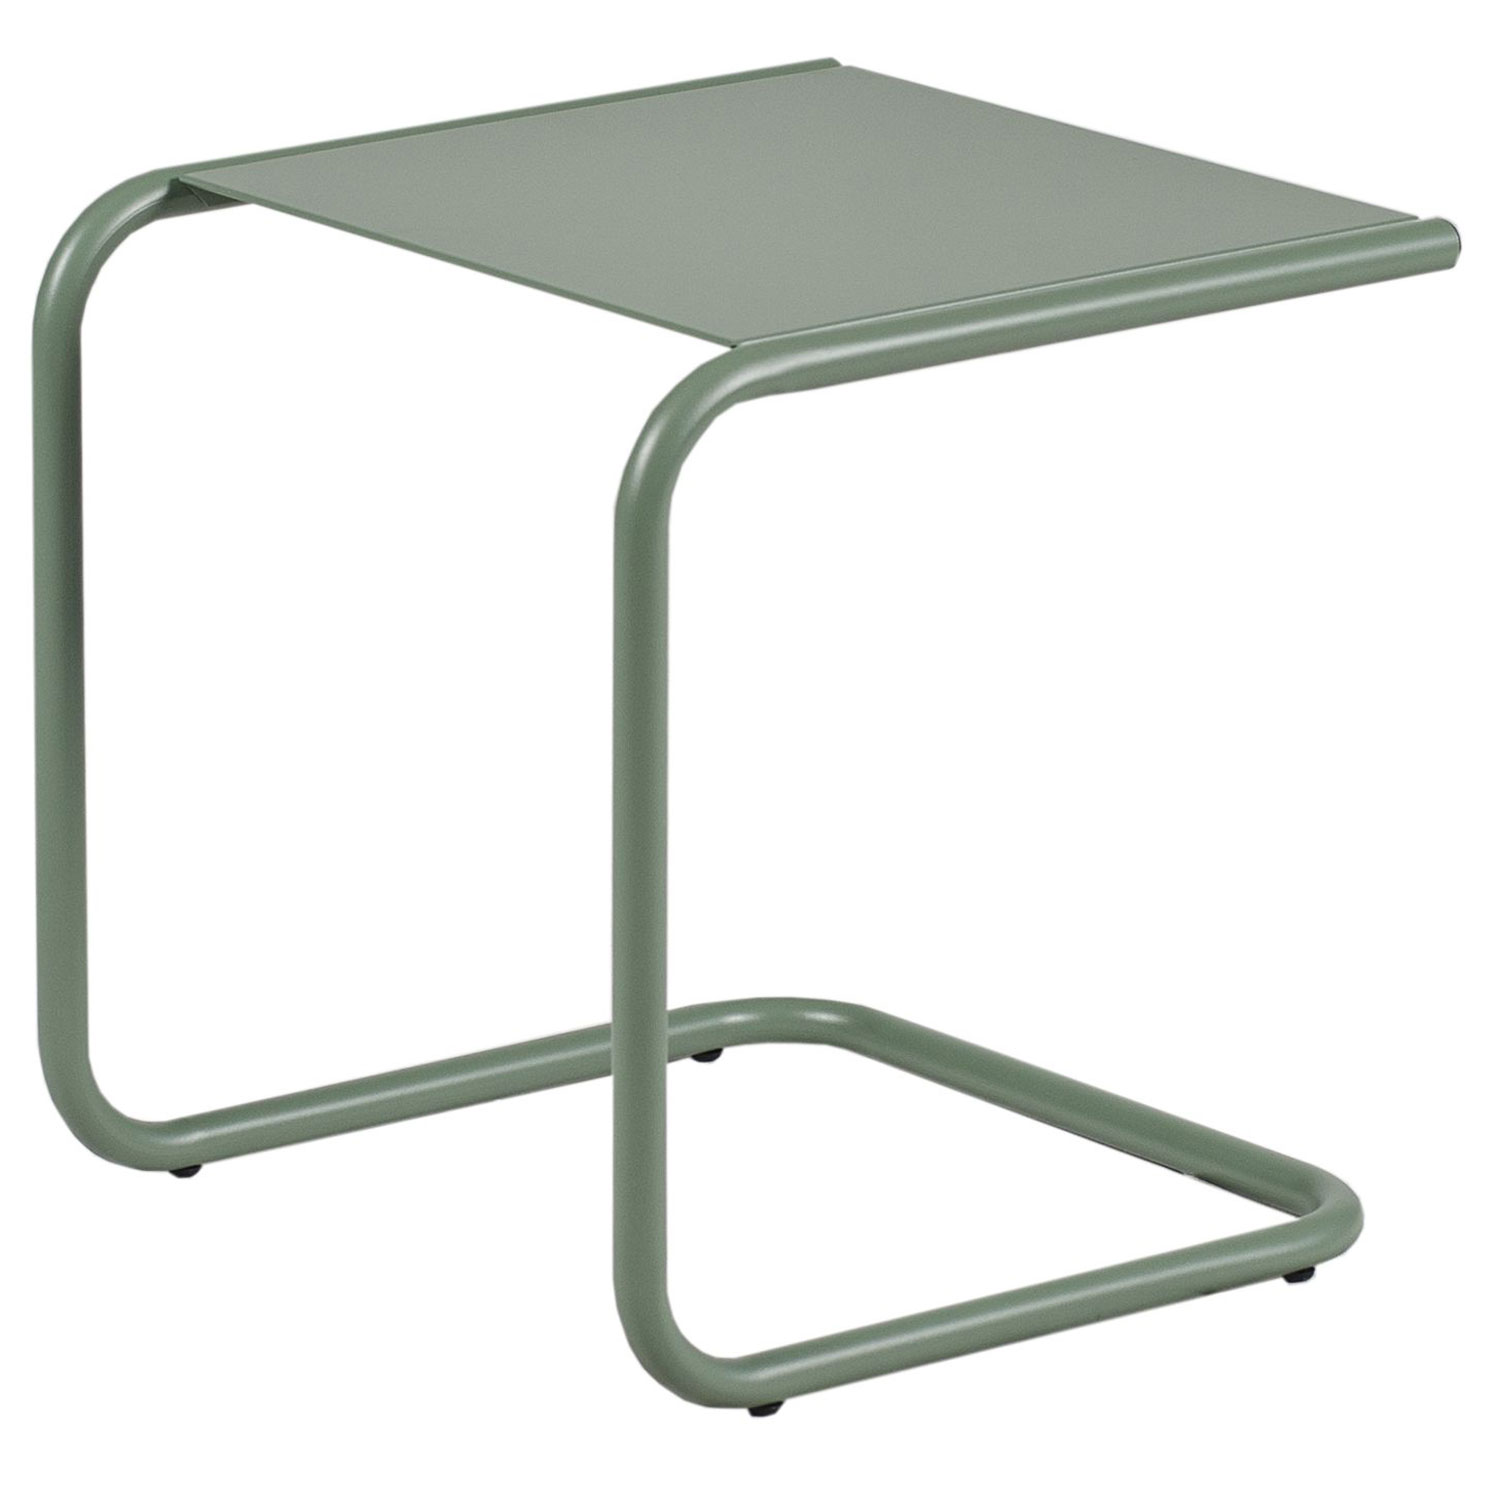 Fiam Club table sage green/sage green aluminium